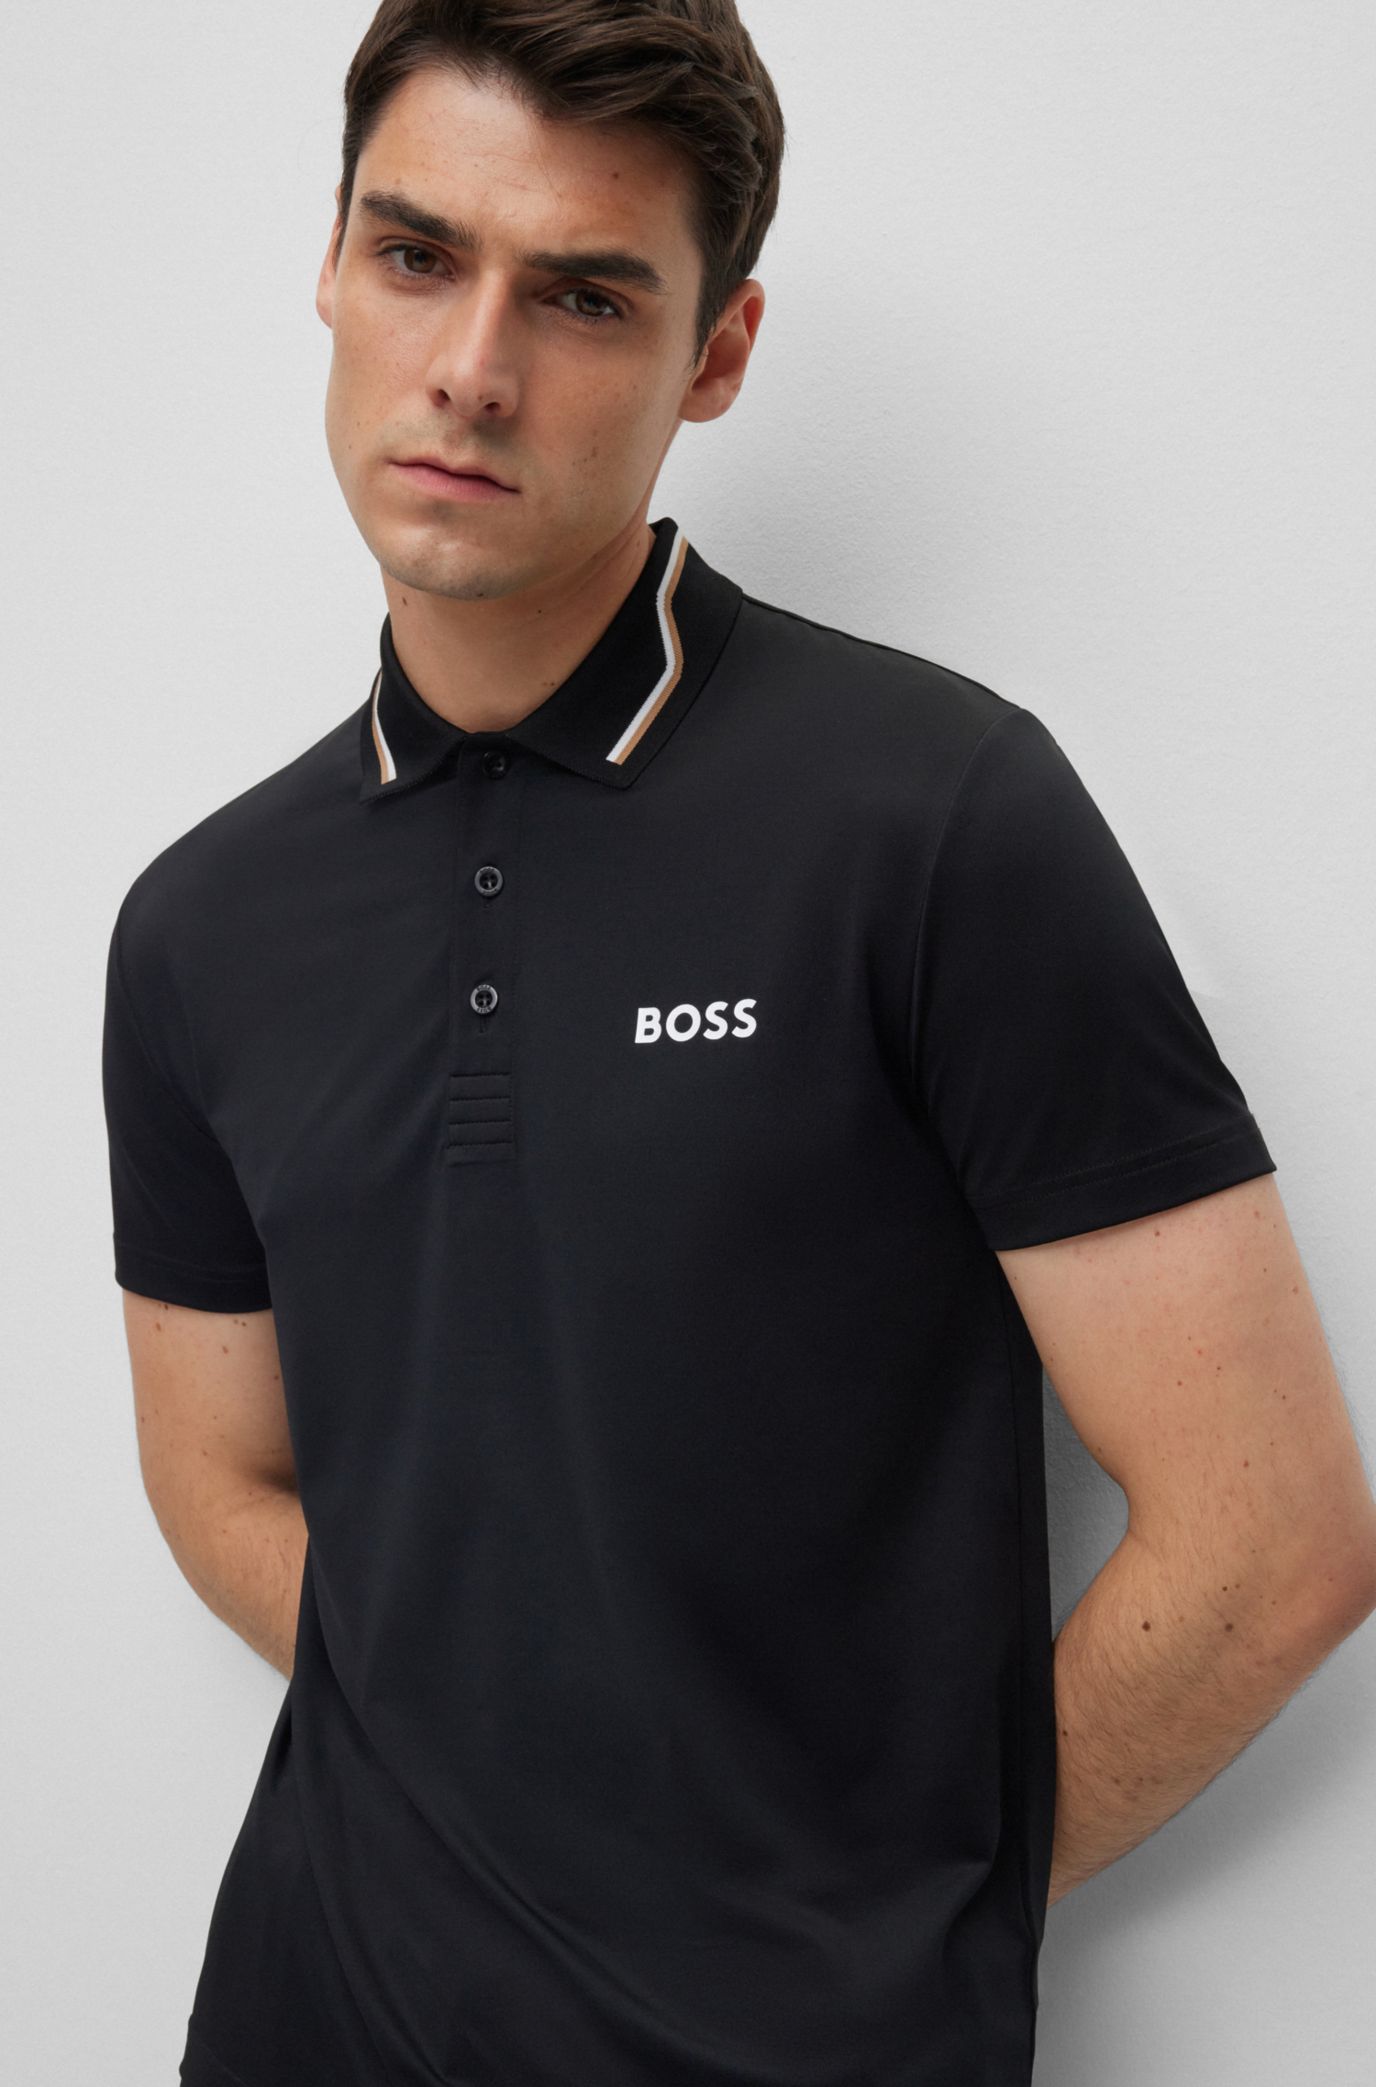 BOSS - collar stripe with polo shirt Contrast-logo